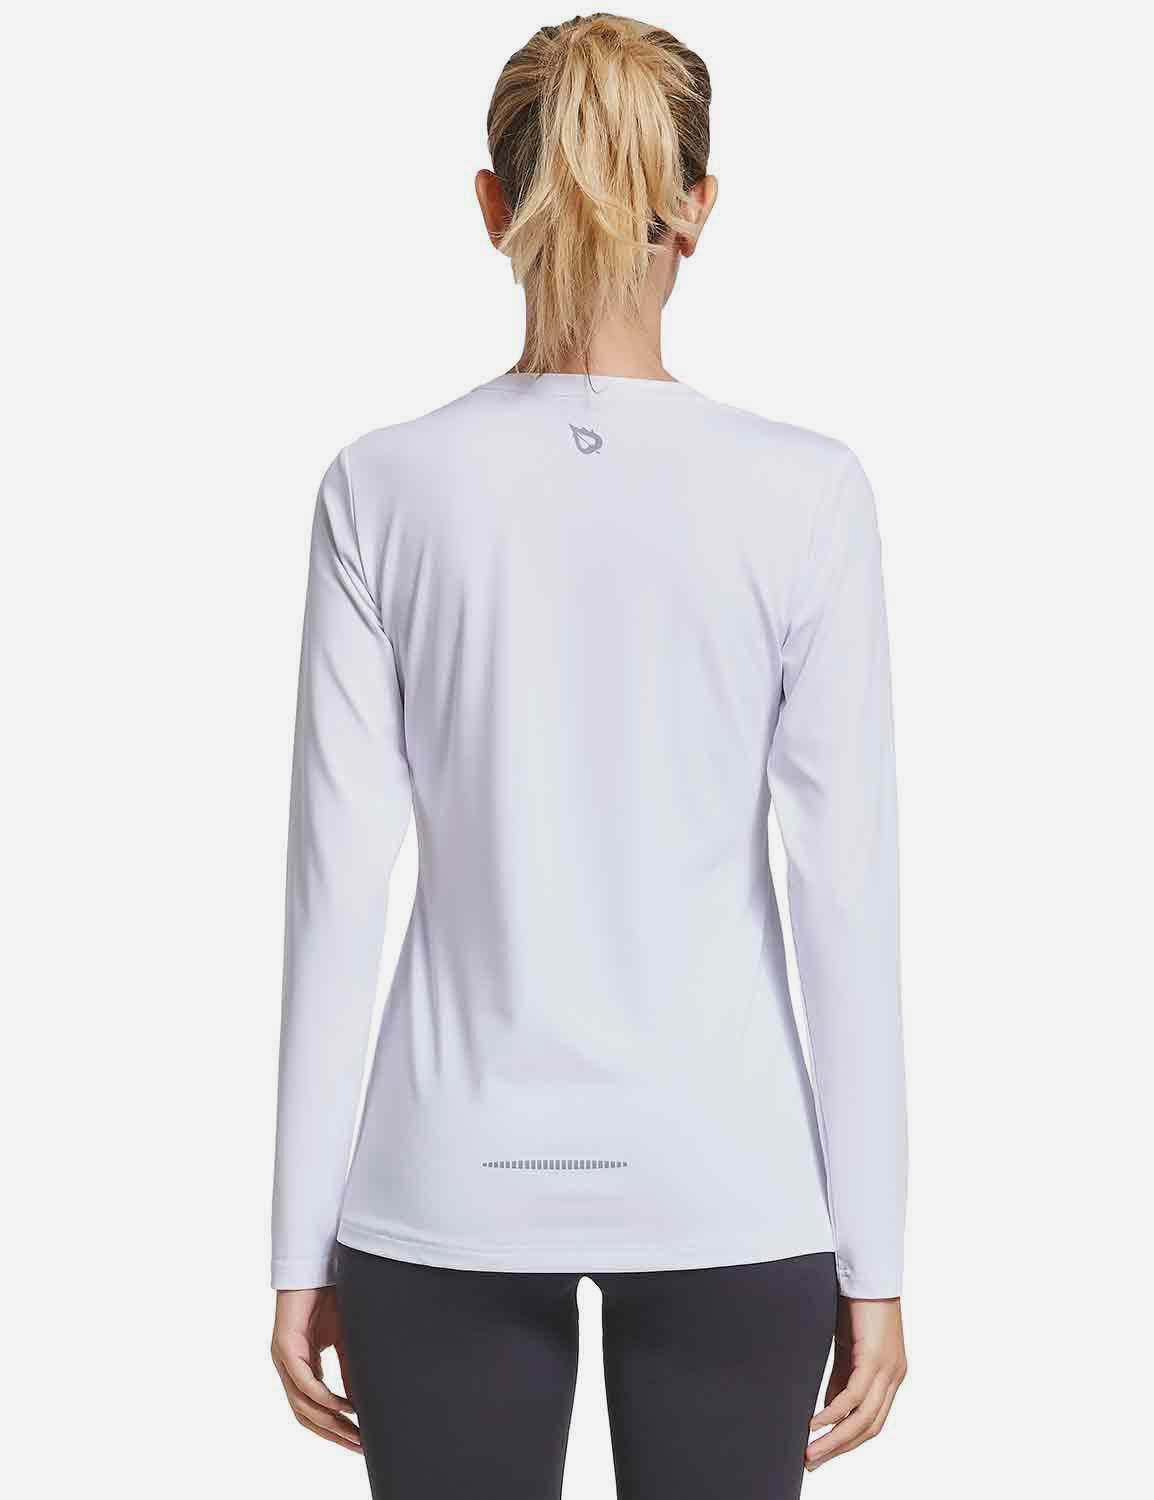 BALEAF Women's Loose Fit Tagless Workout Long Sleeved Shirt abd294 White Back